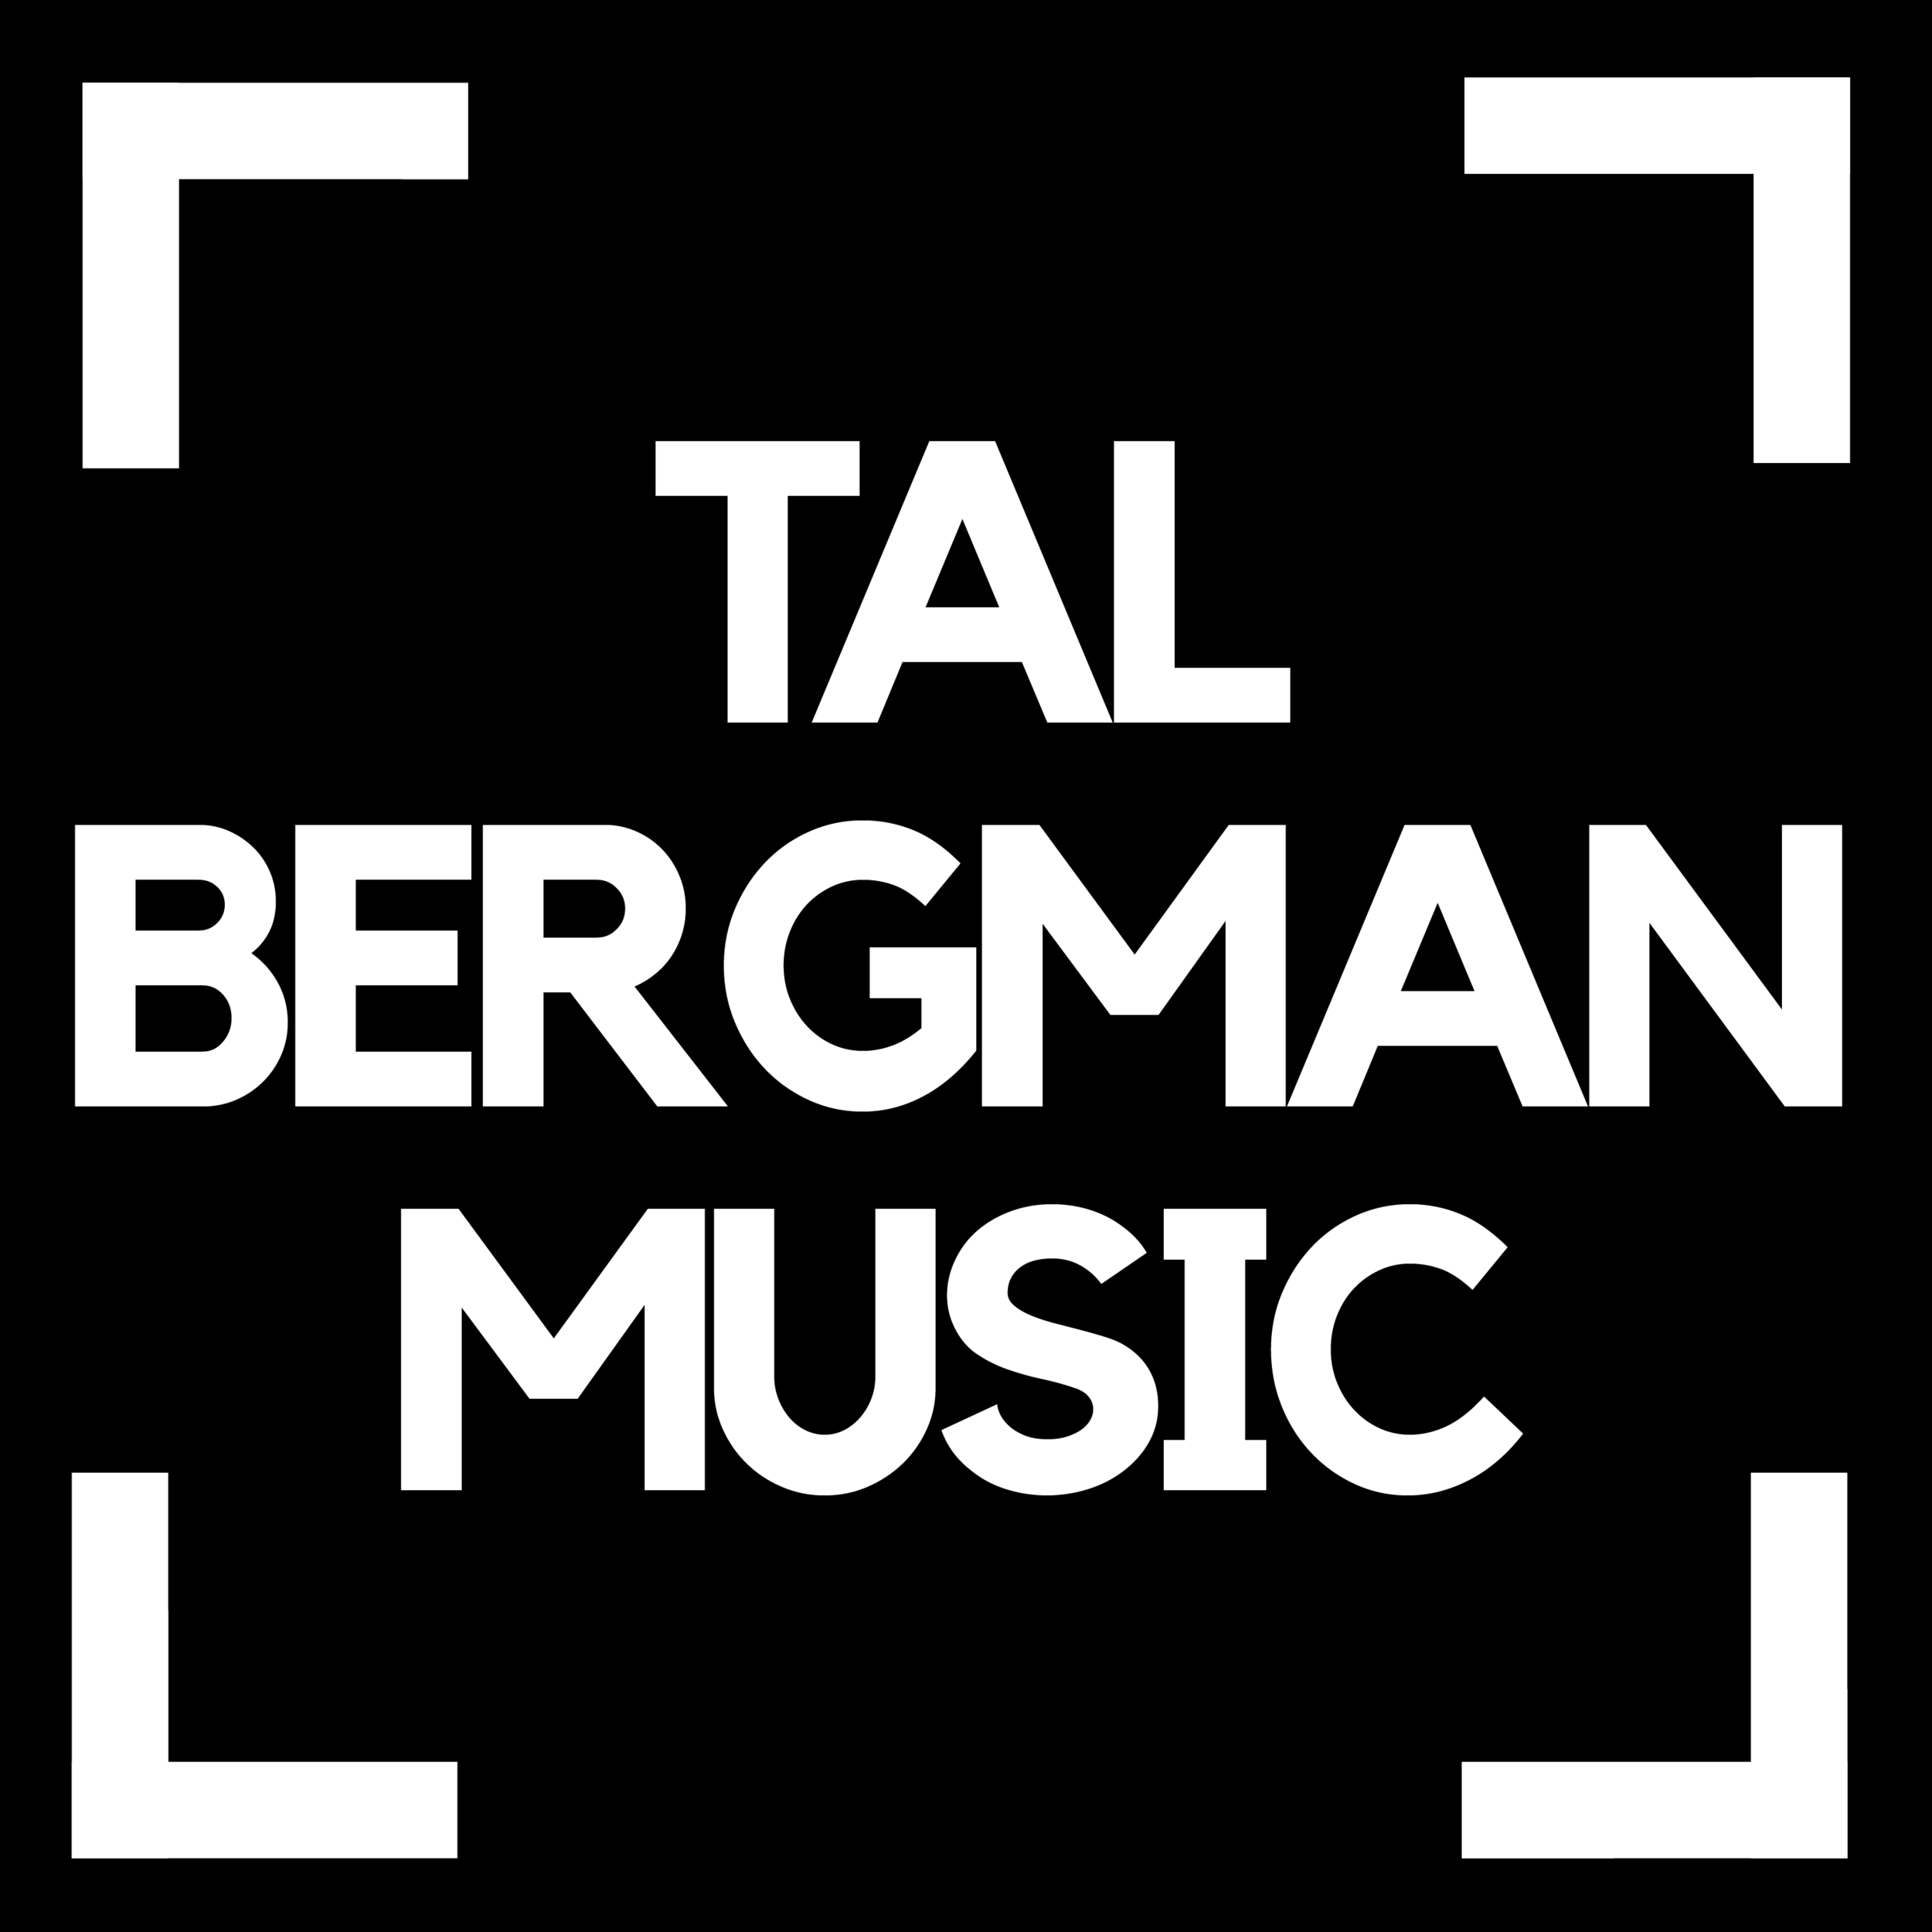 Tal Bergman Music